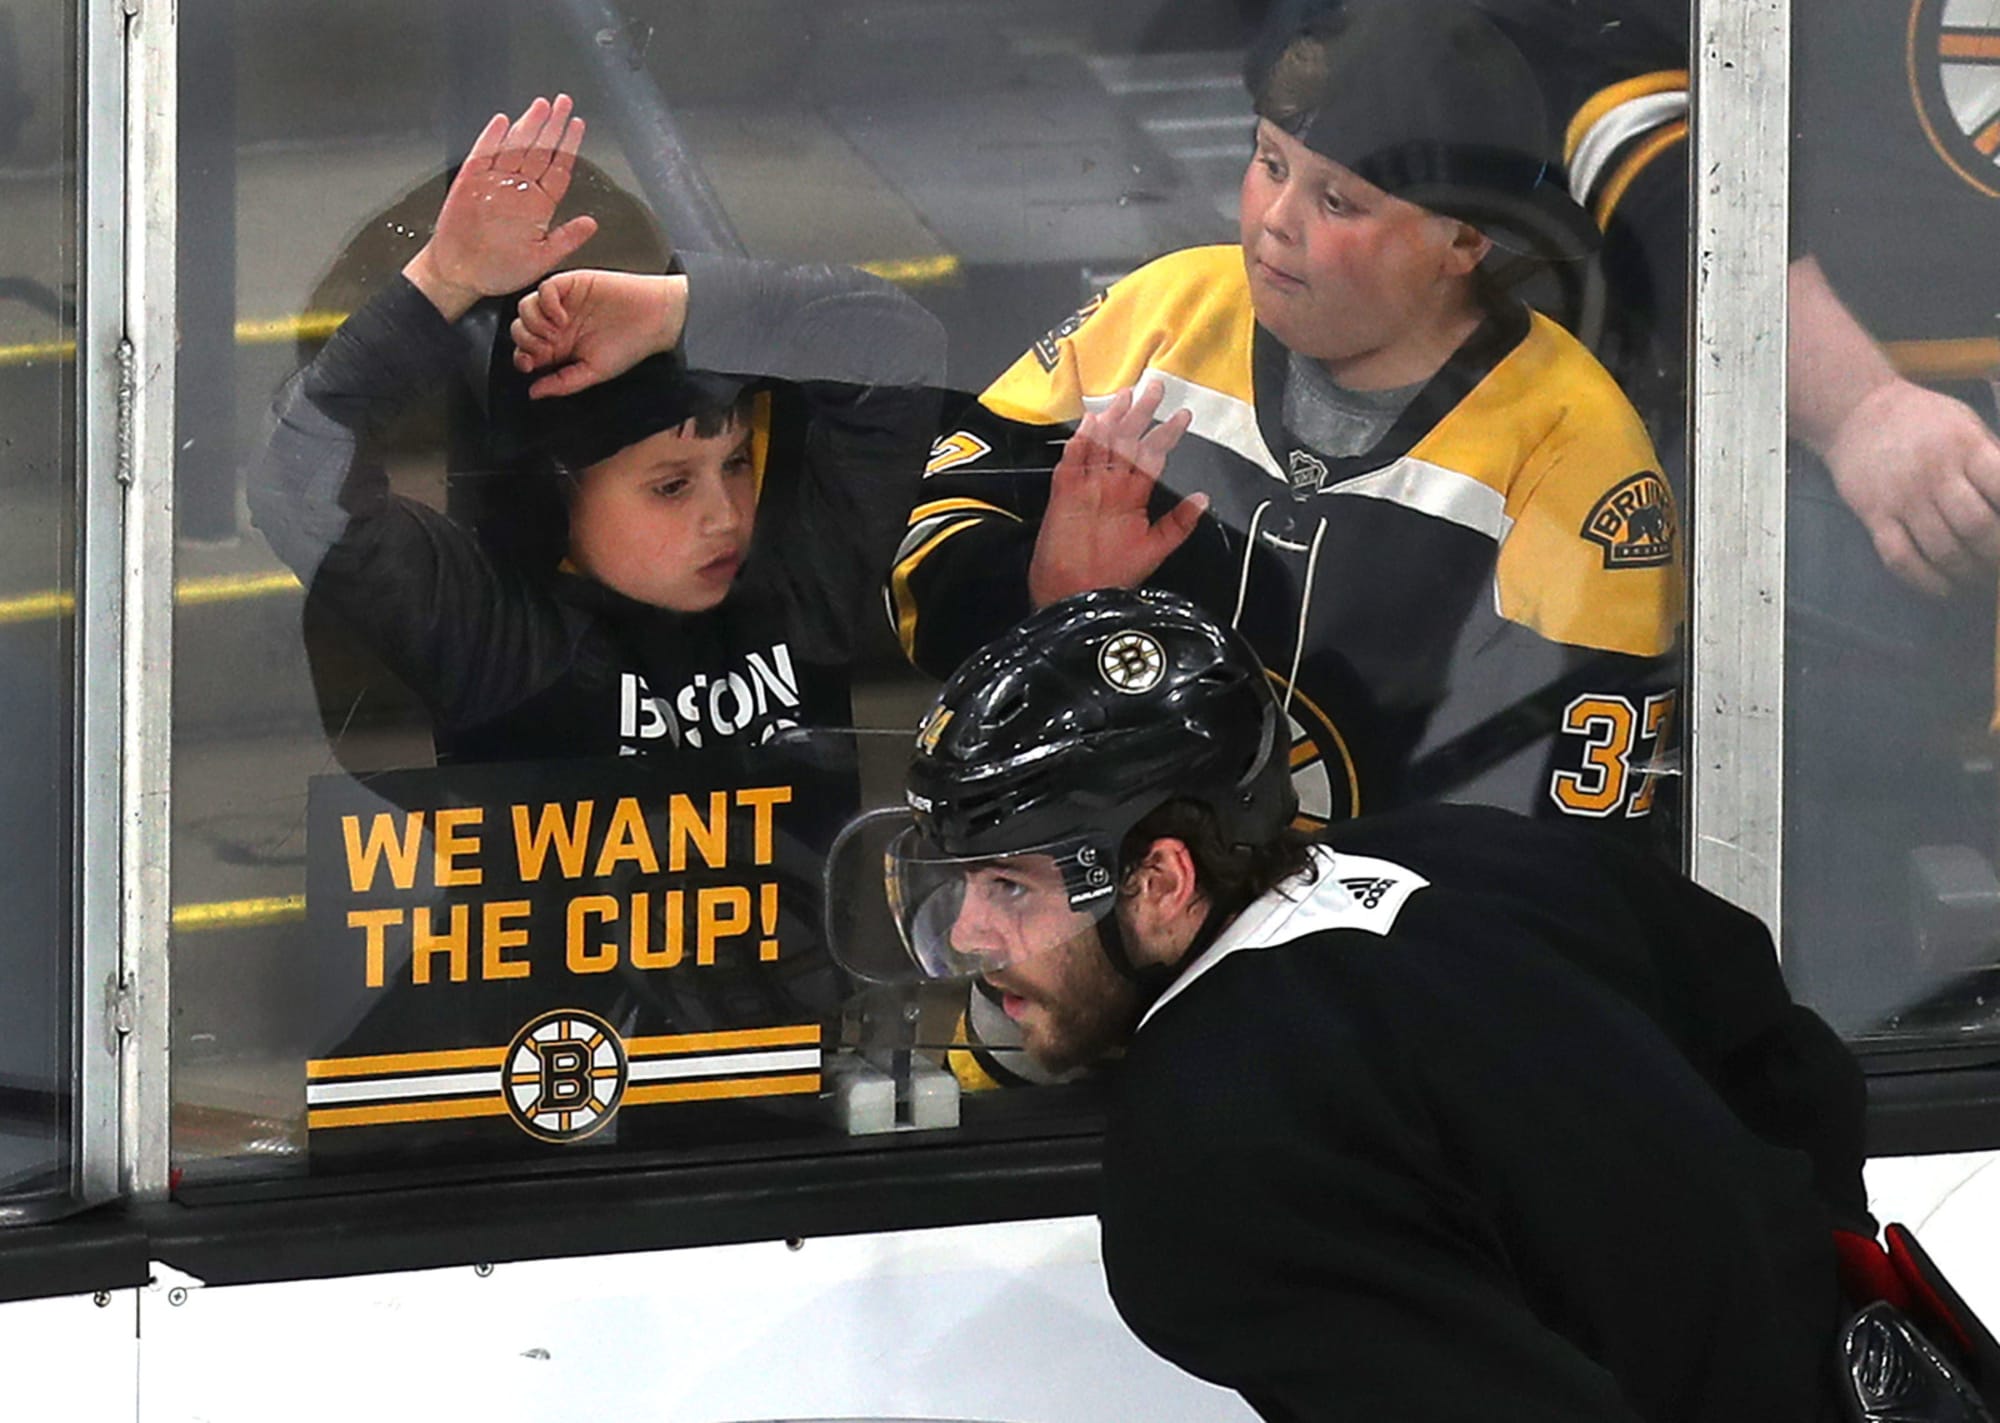 Boston Bruins begin Stanley Cup defense